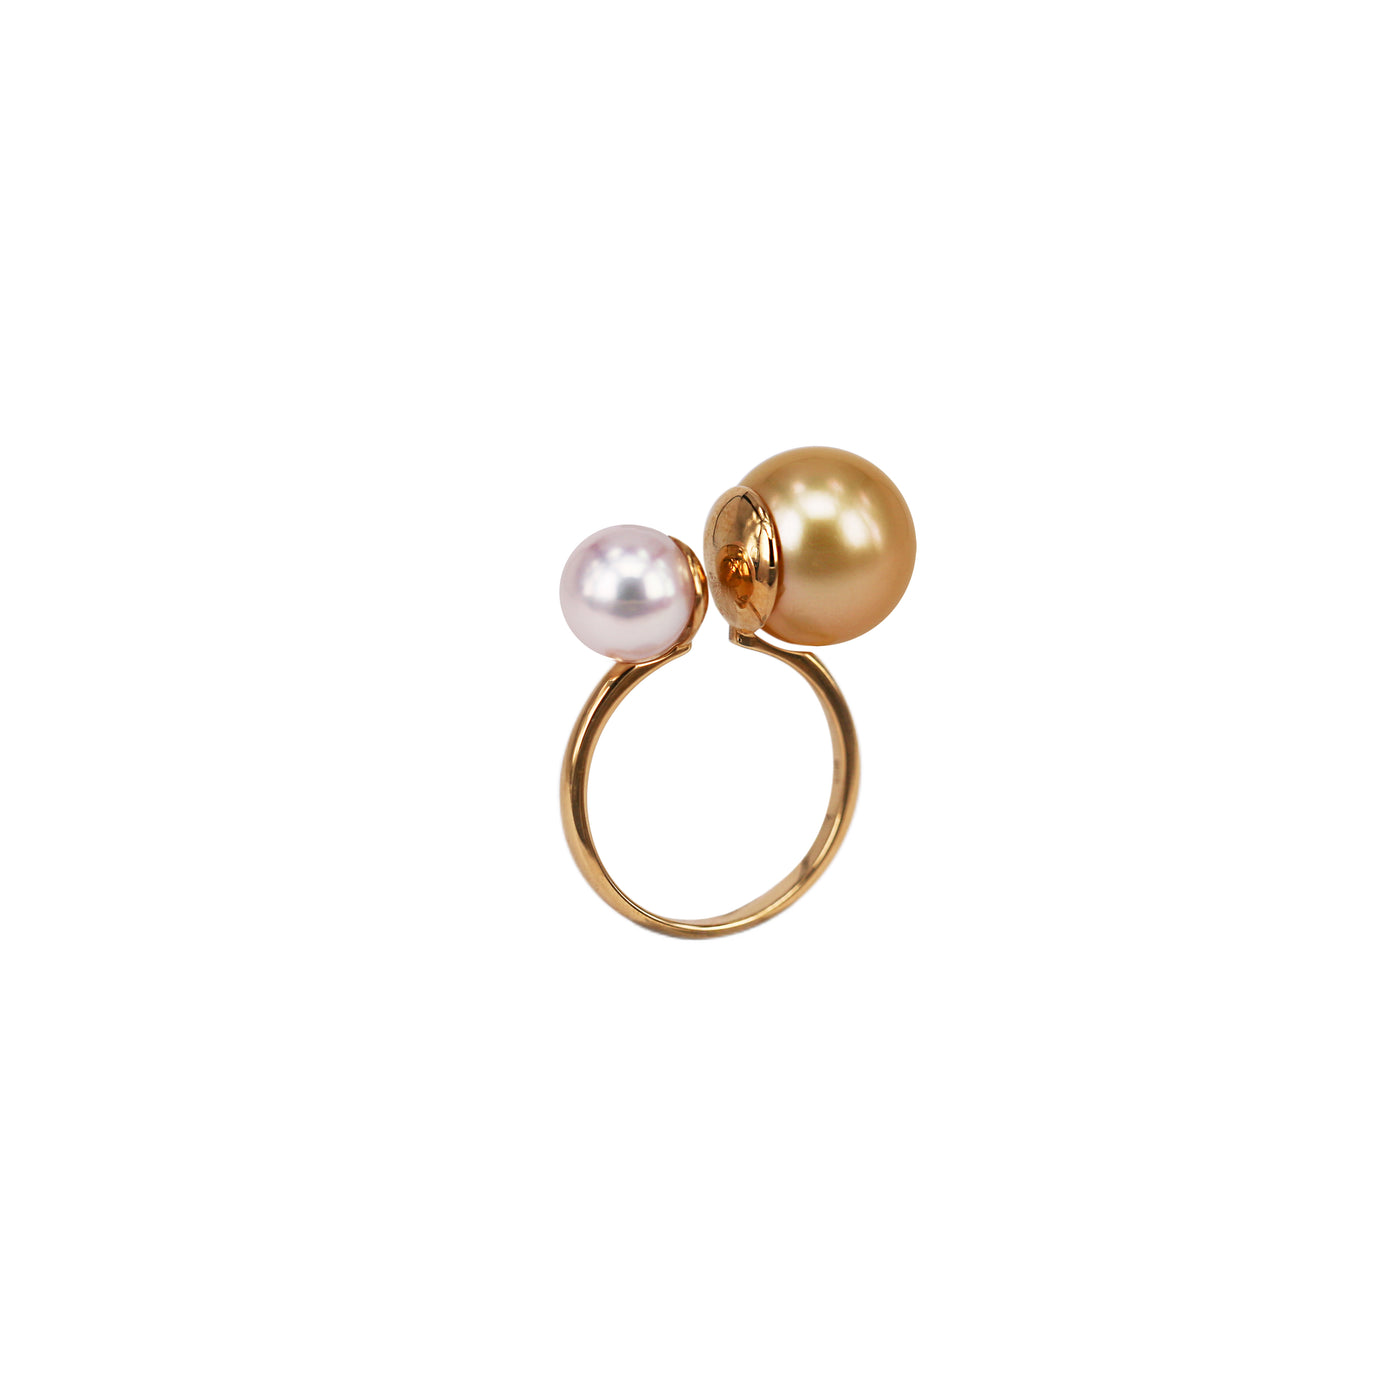 Gemini pearl Ring | Angela Jewellery Australia